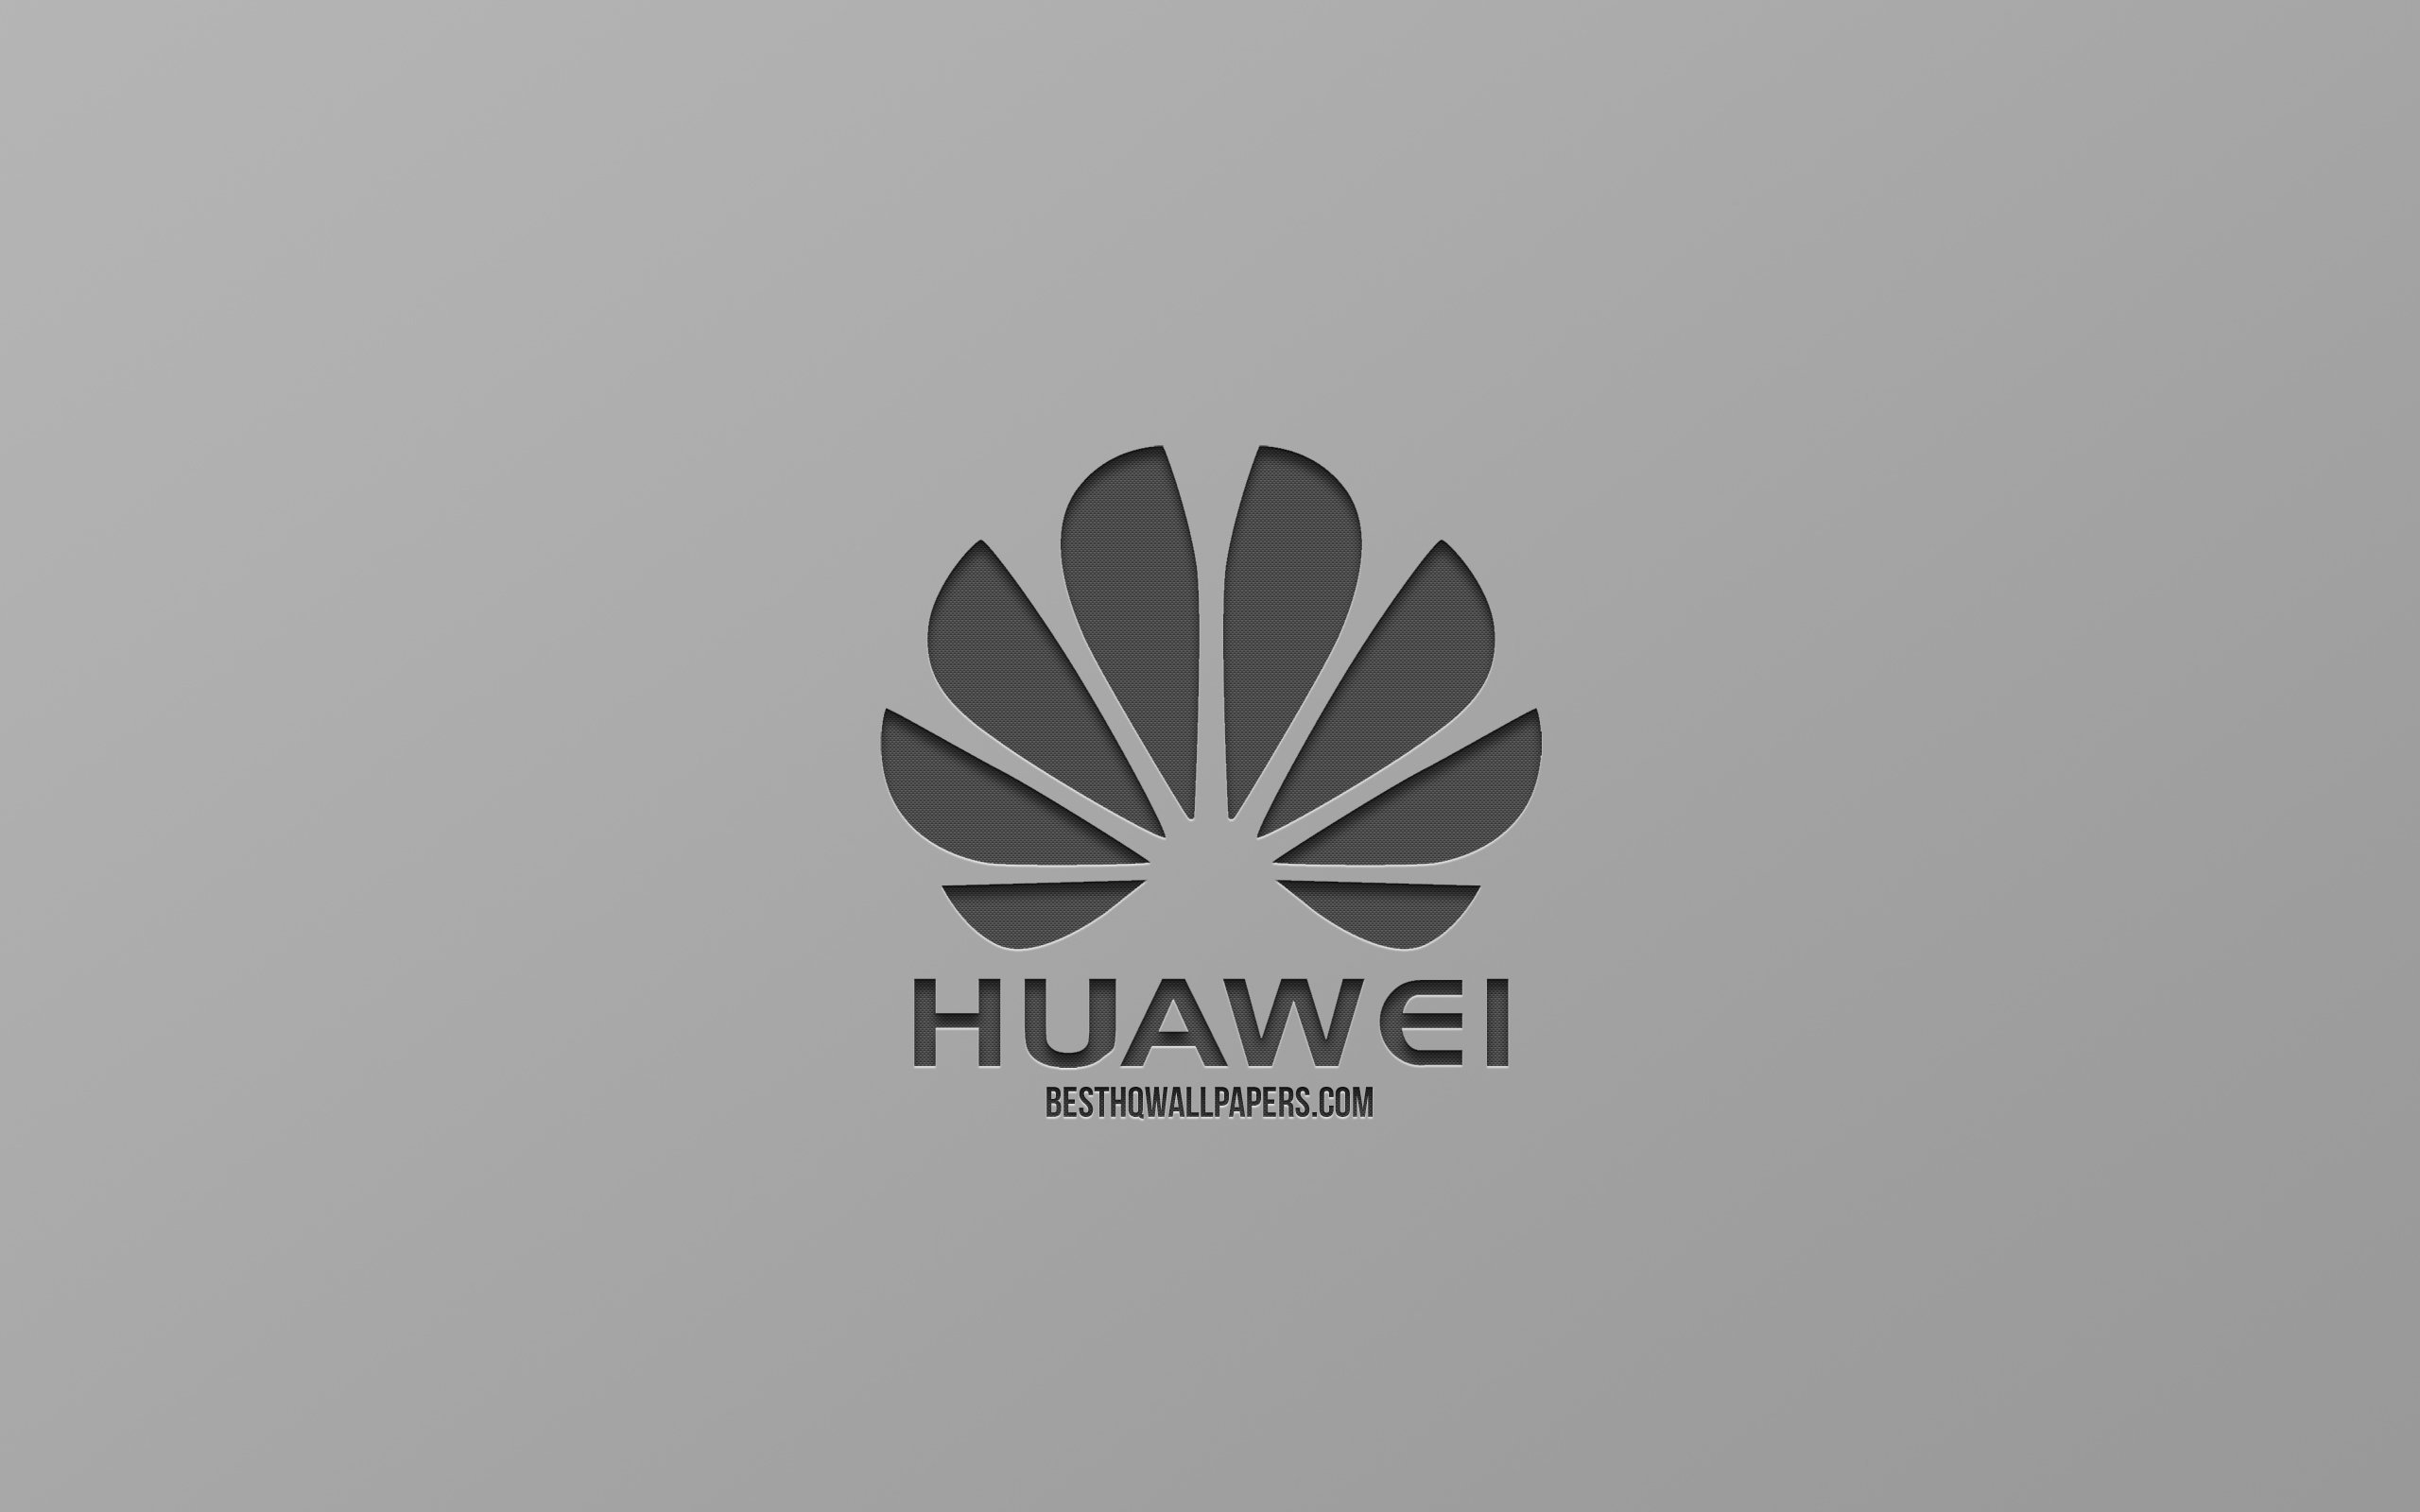 Обои на телефон Huawei